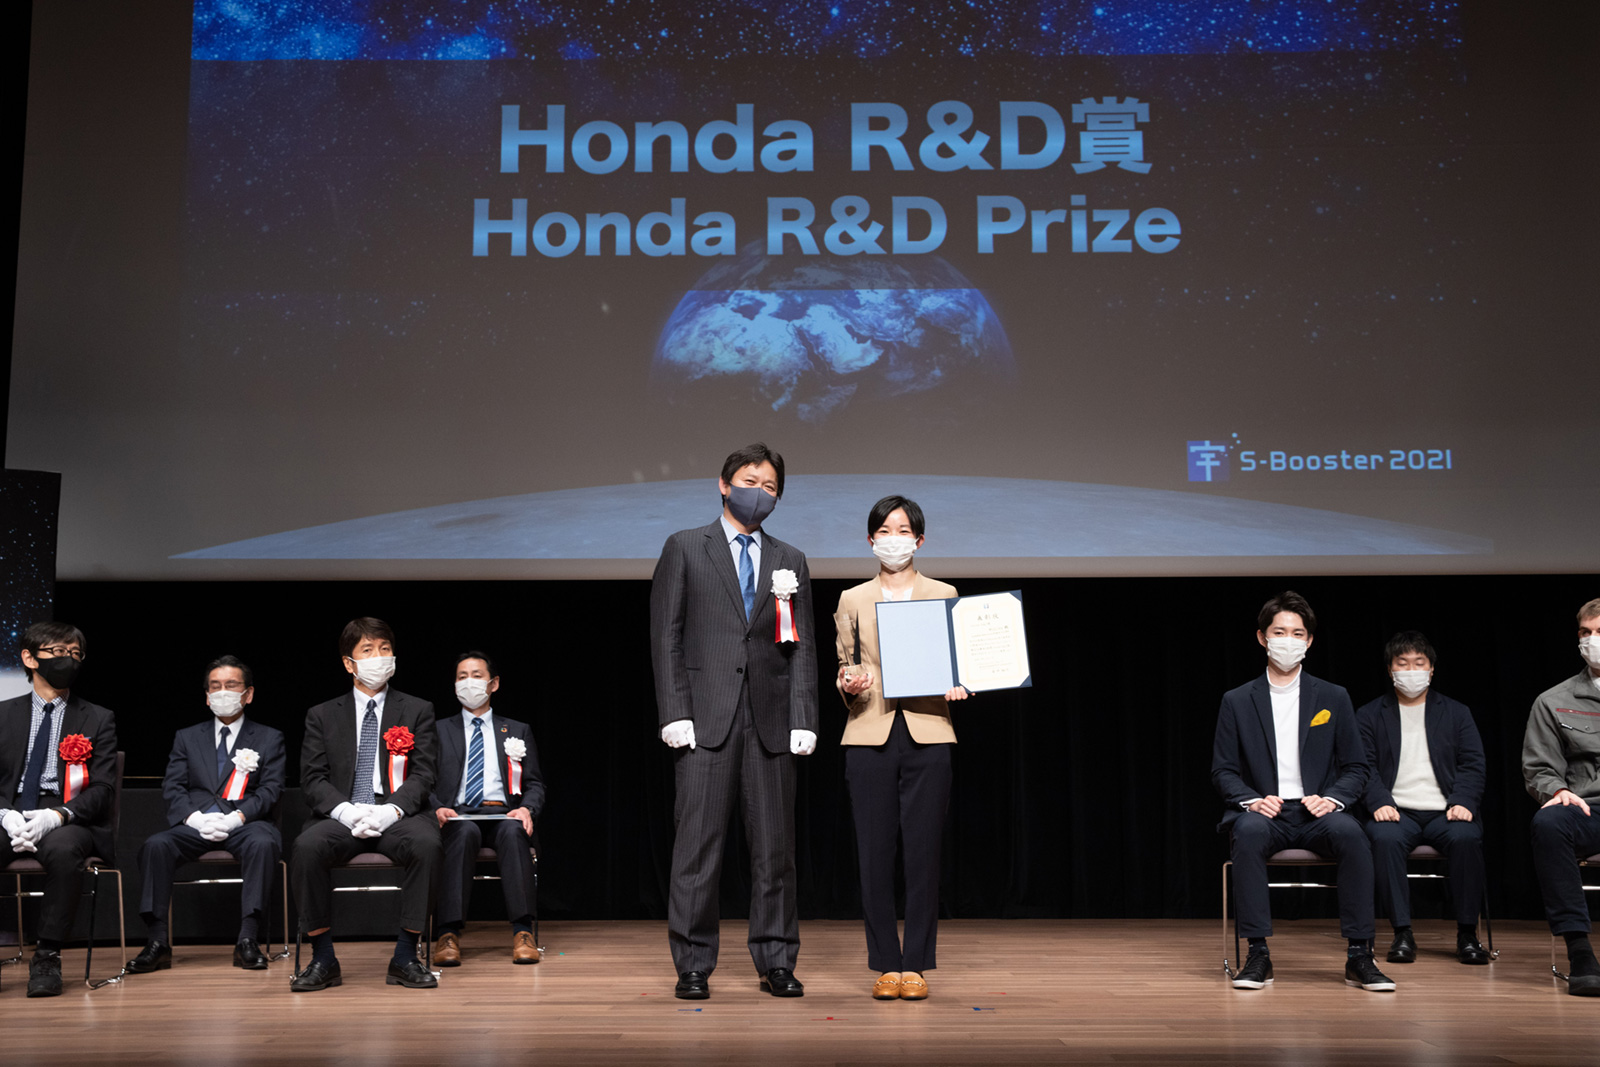 Honda R&D Prize